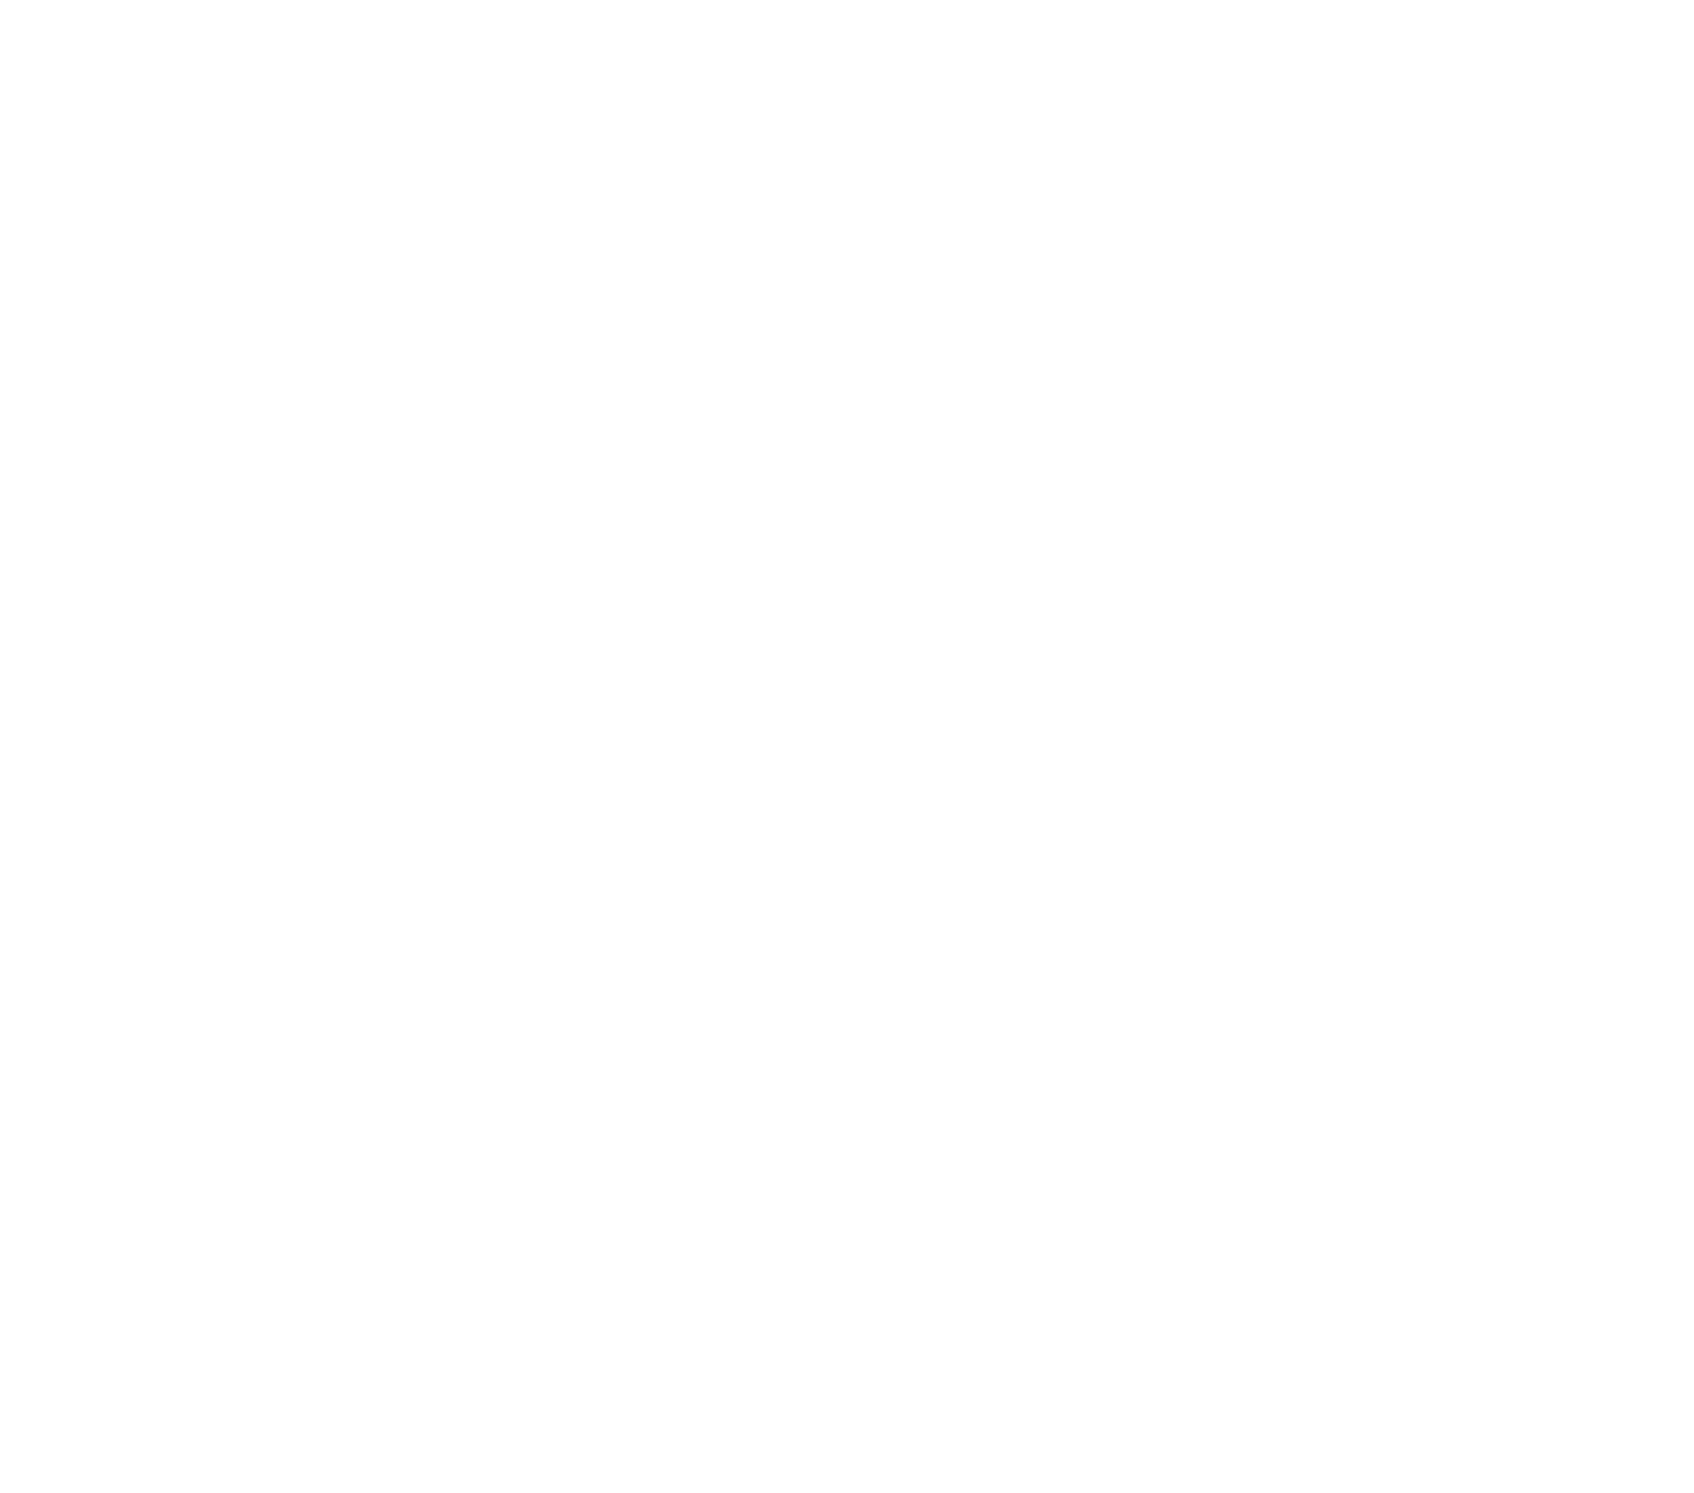 Azteca Ranch Music